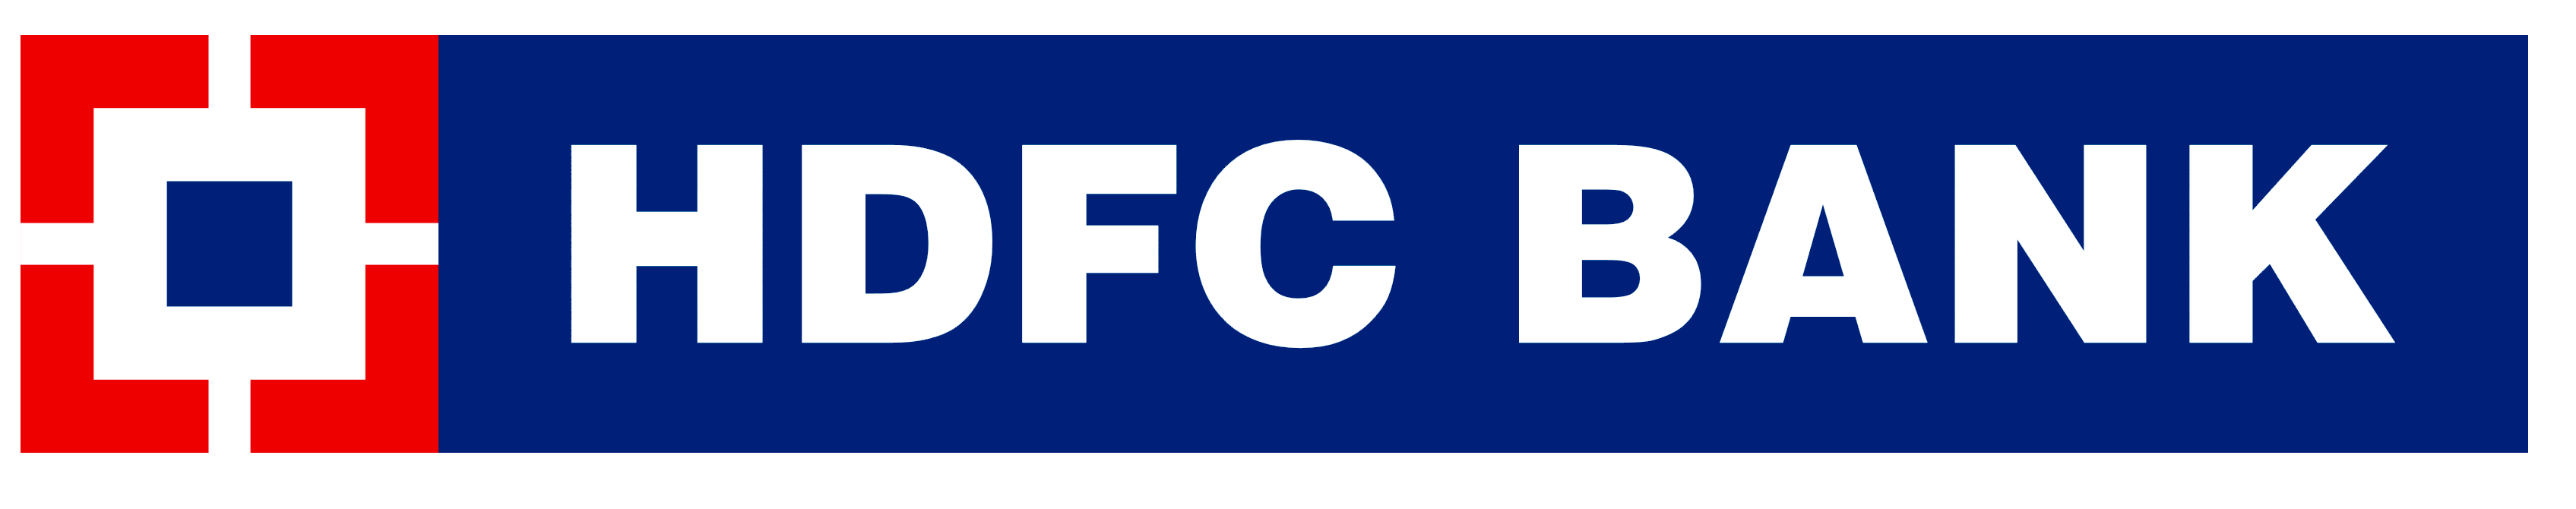 HDFC Bank – Logos Download